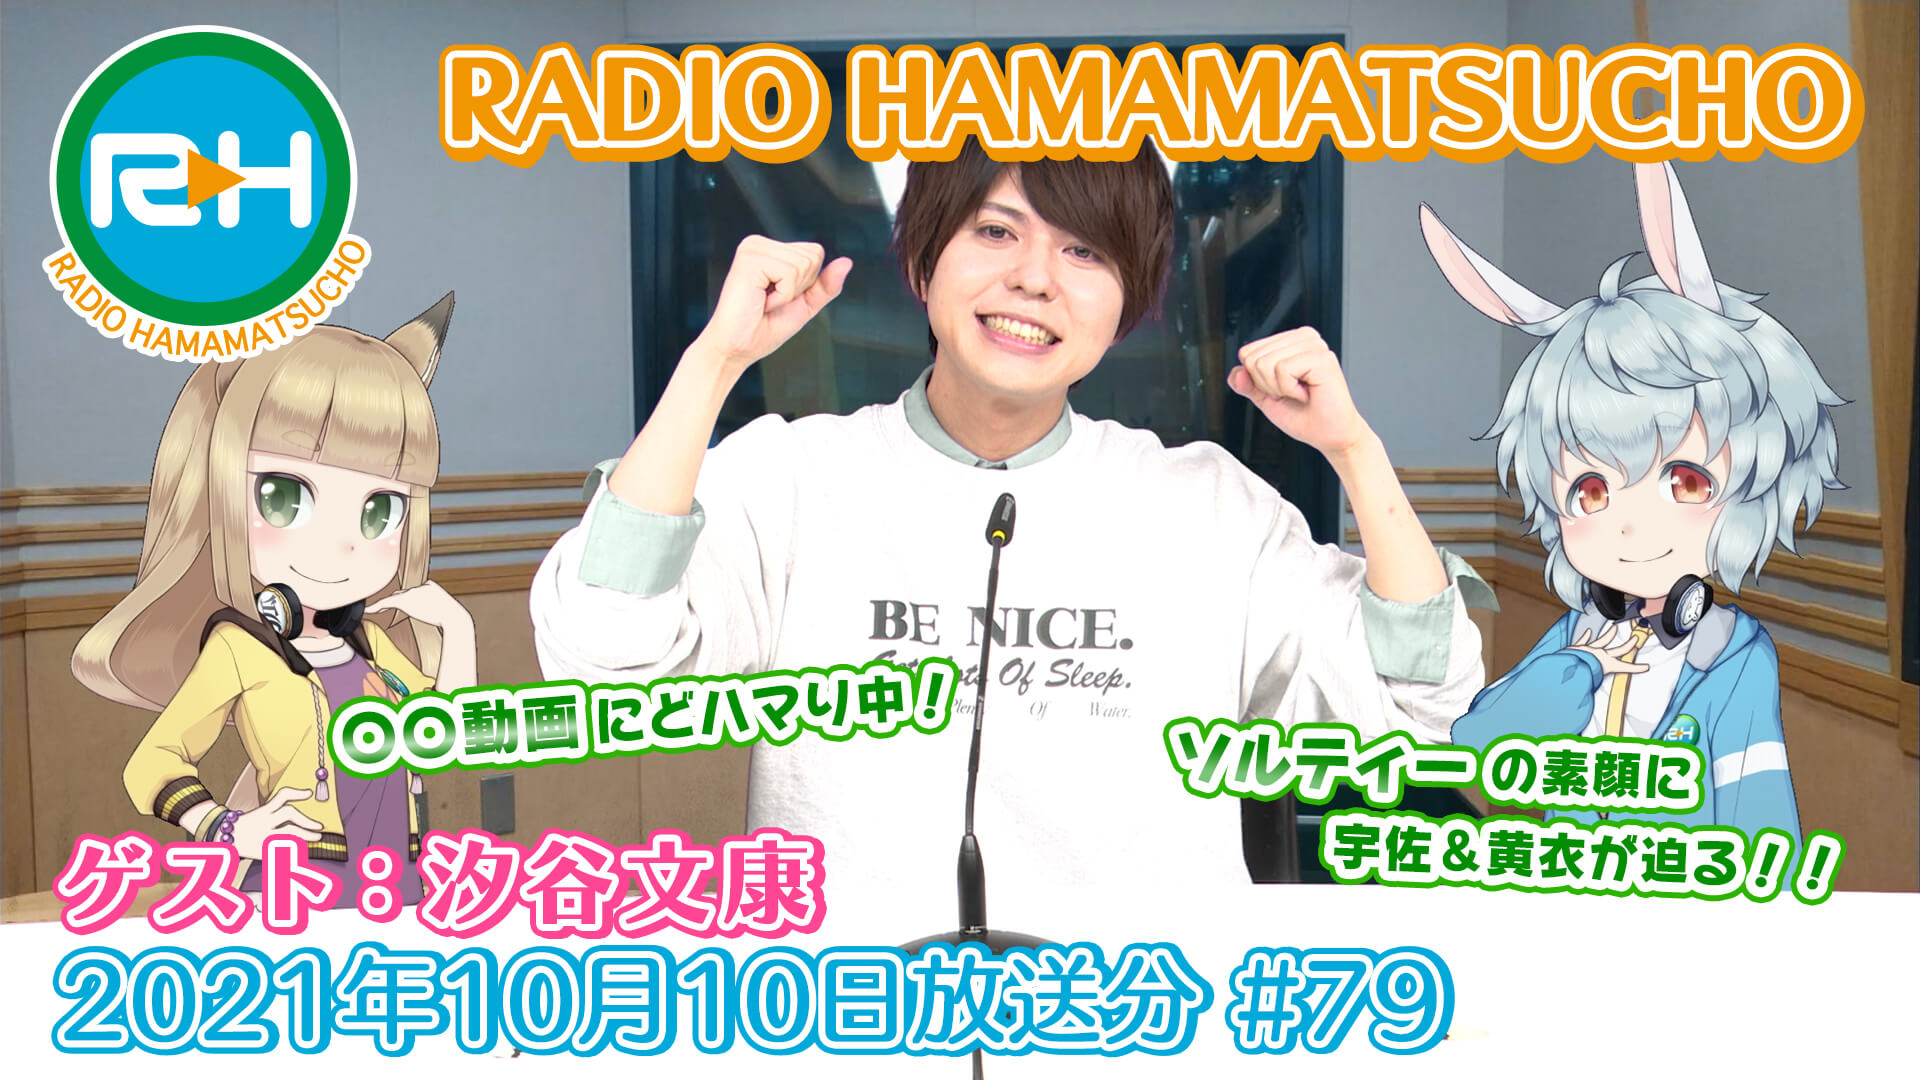 RADIO HAMAMATSUCHO 第79回 (2021年10月10日放送分) ゲスト: 汐谷文康